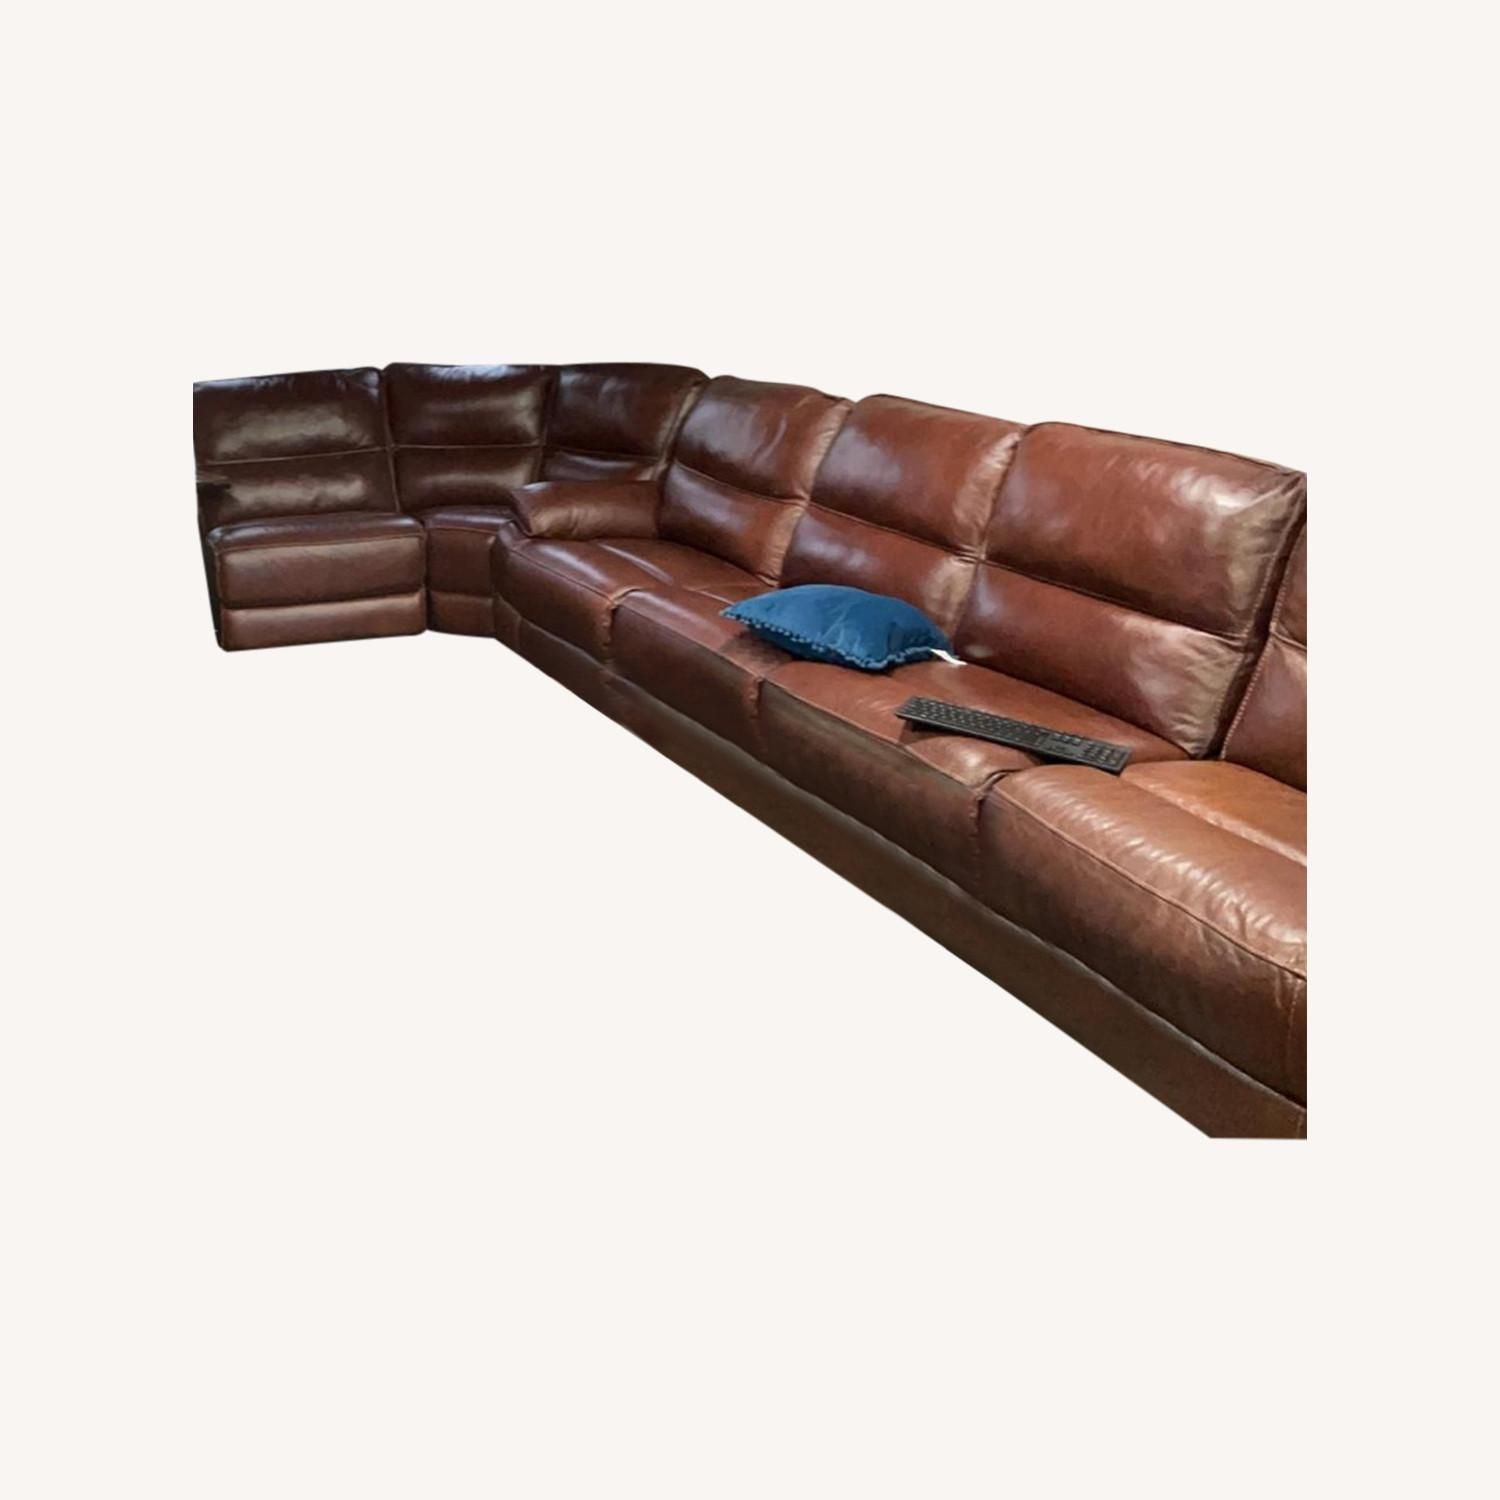 Bobs Furniture Leather Sofa : Trailblazer Gray Leather Pertaining To Trailblazer Gray Leather Power Reclining Sofas (View 6 of 15)